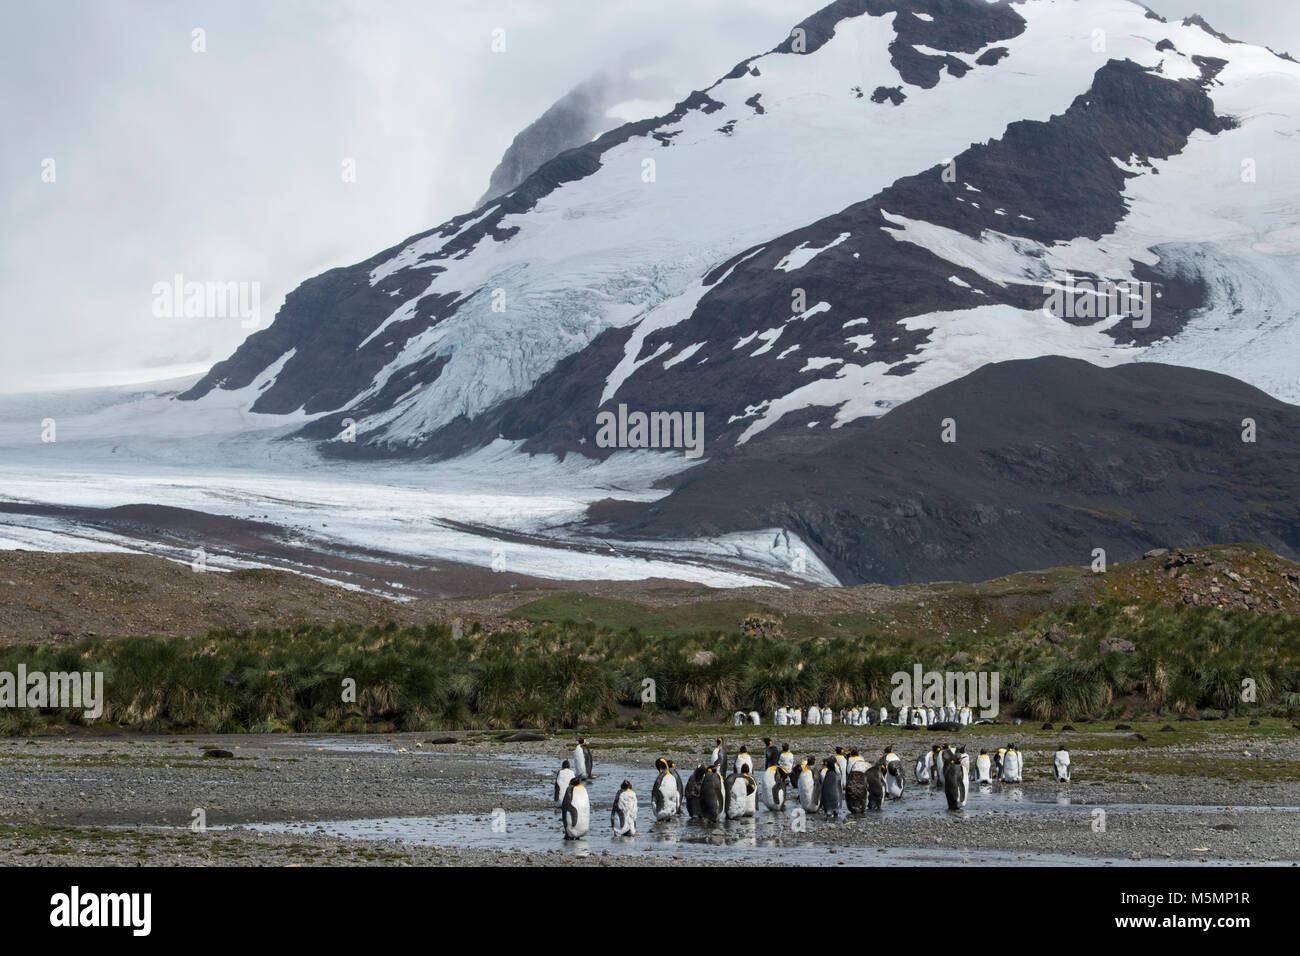 South Georgia, Salisbury Plain. King penguins and fur seals in typical tussock grass habitat. Stock Photo